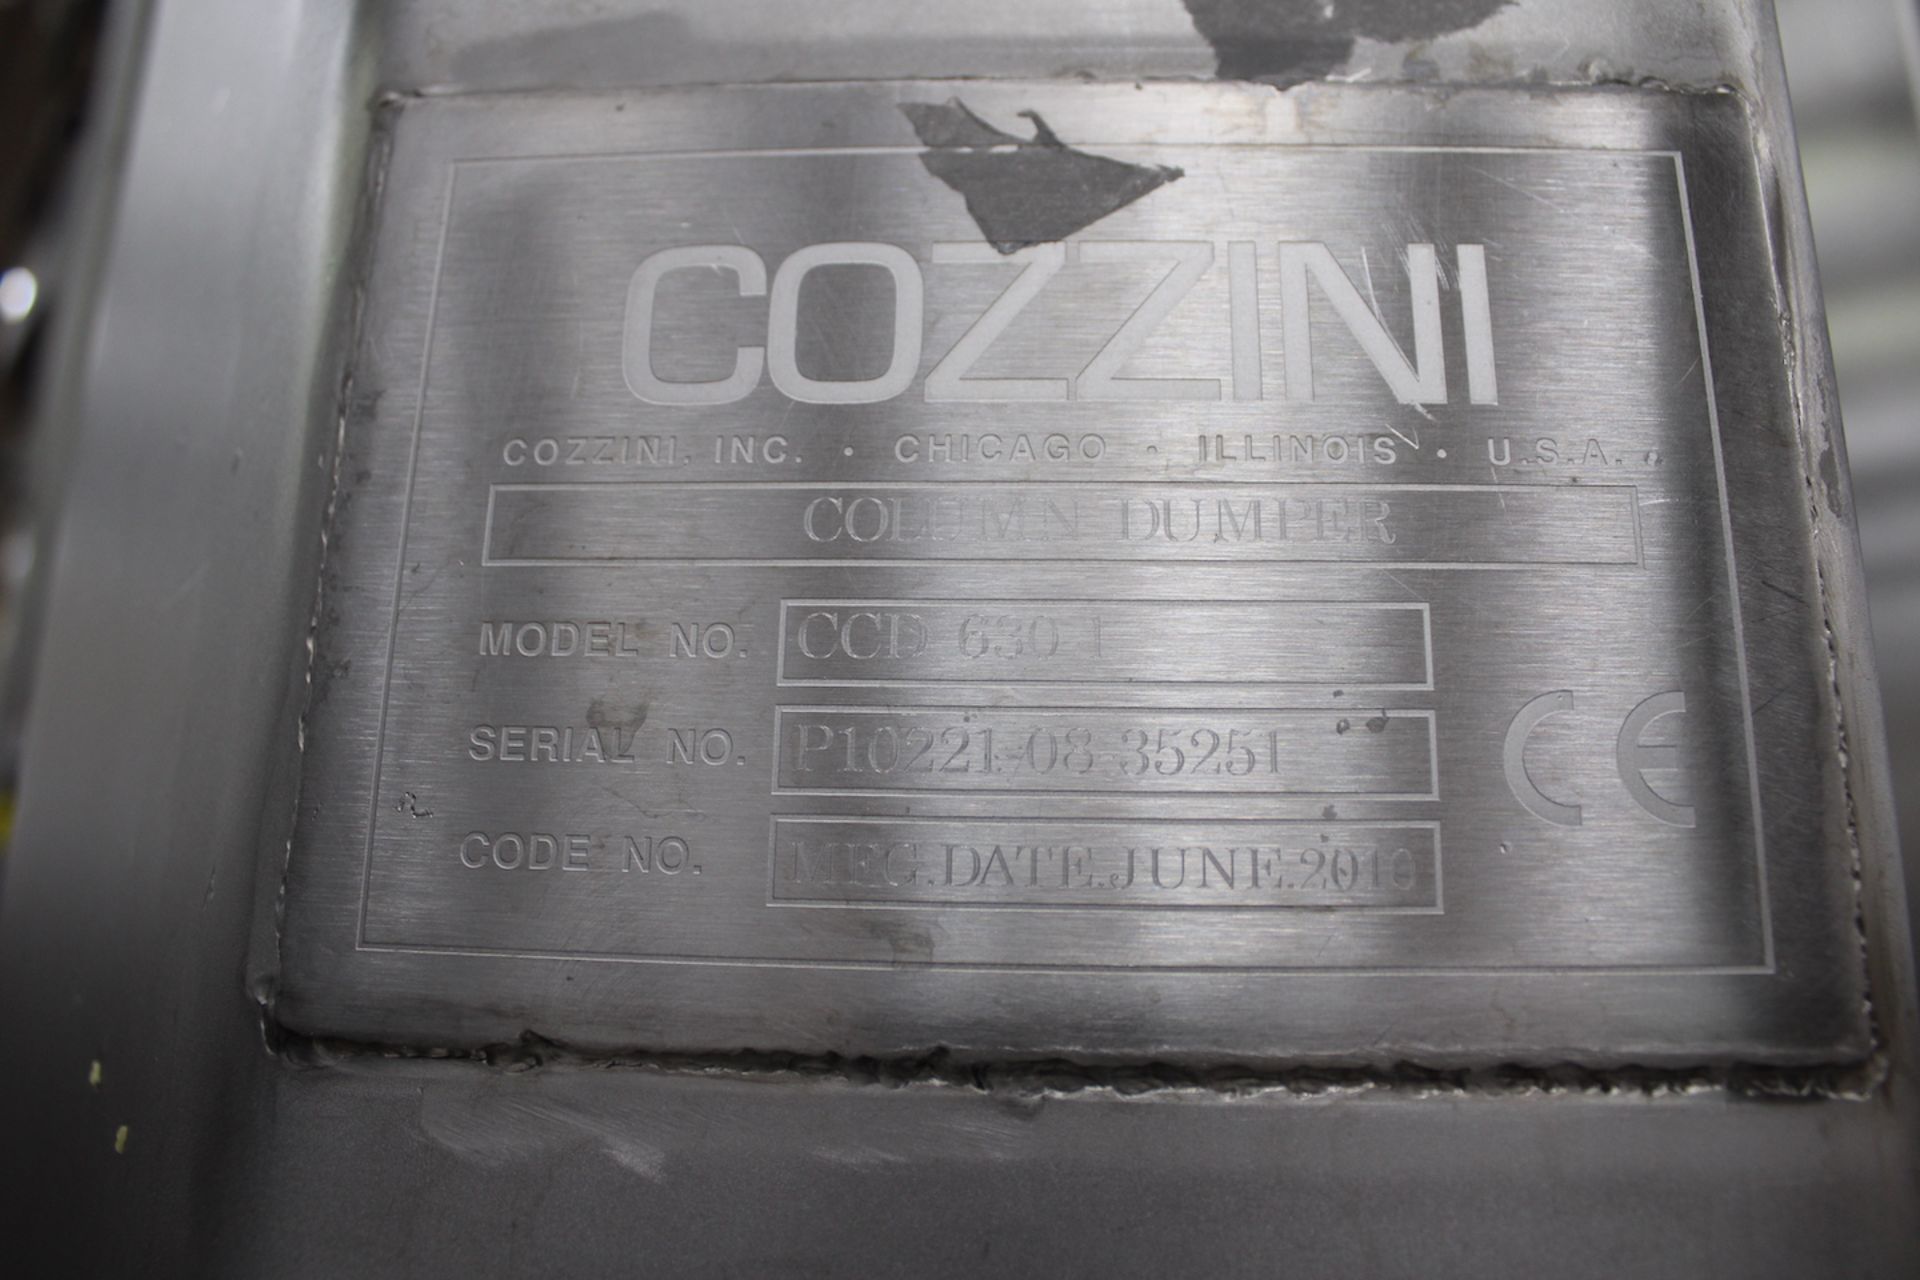 COZZINI COLUMN LIFT DUMPER, MODEL CCD 630, S/N P10221-08-35251 - Image 2 of 3